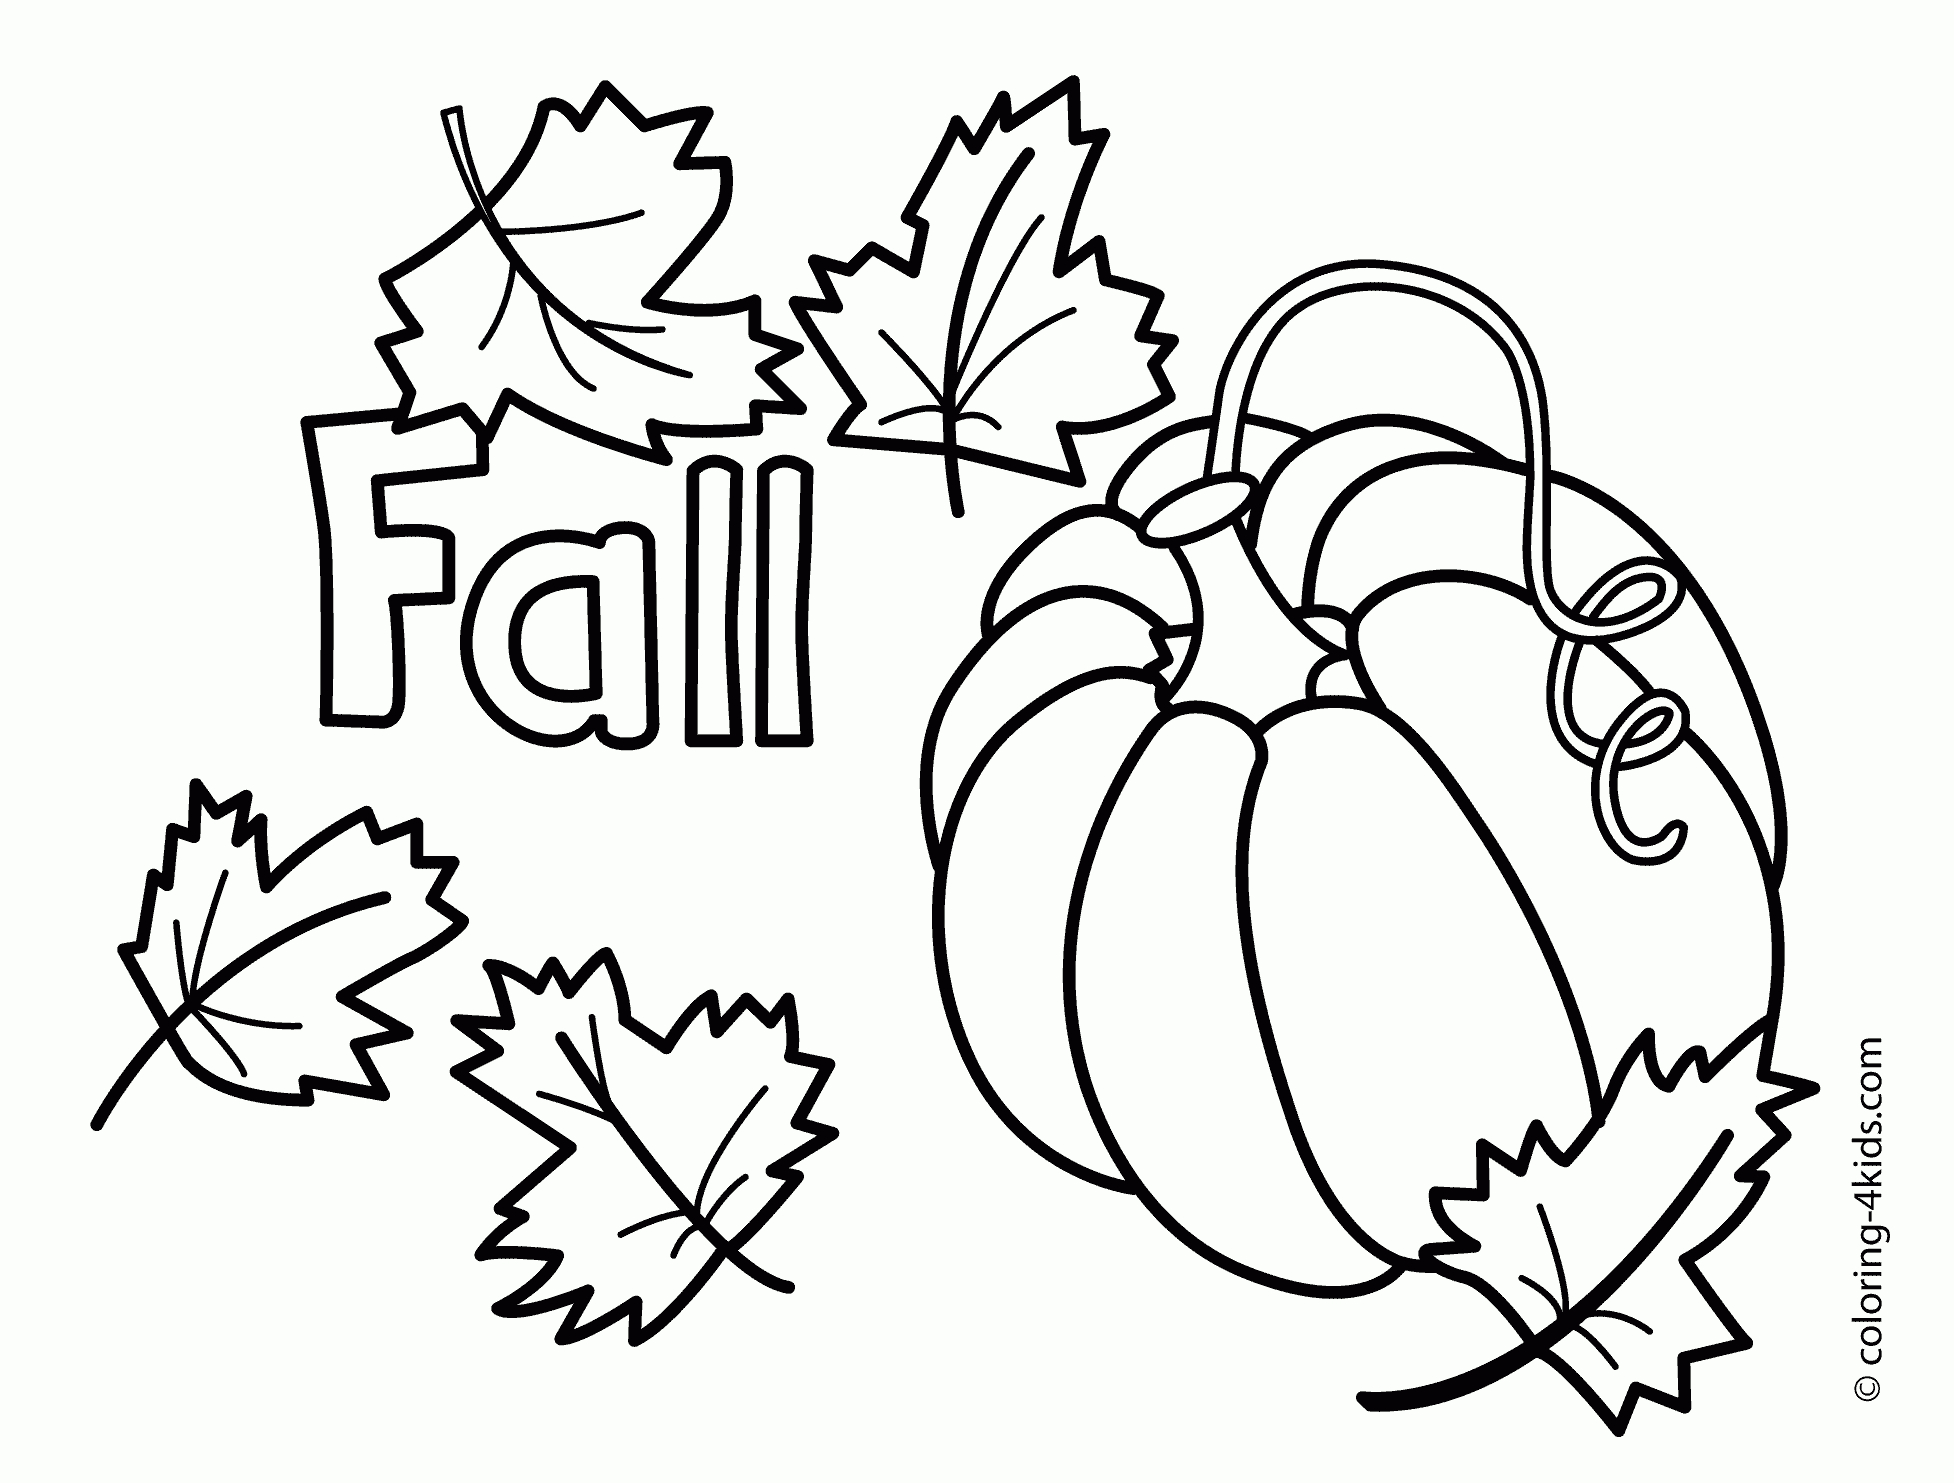 Coloring Sheets For Fall 0 #4190 - Free Fall Printable Coloring Sheets